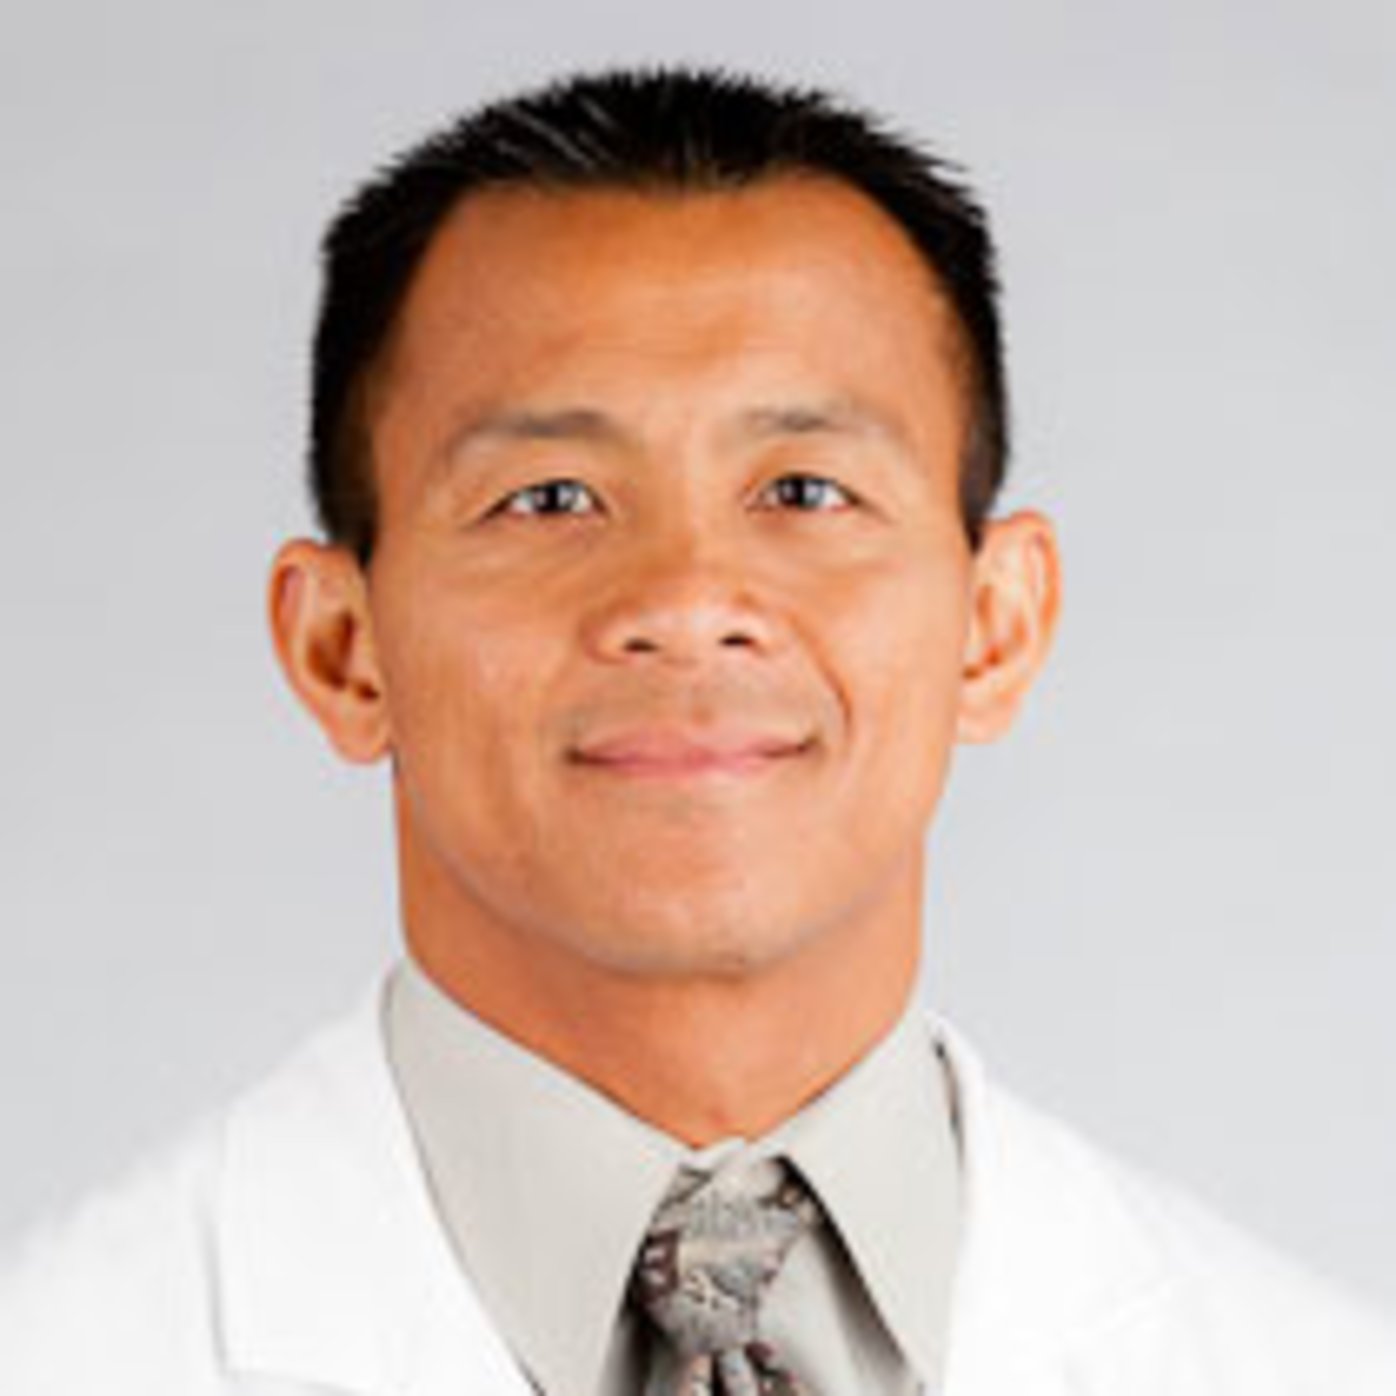 Dr. Edward Huynh